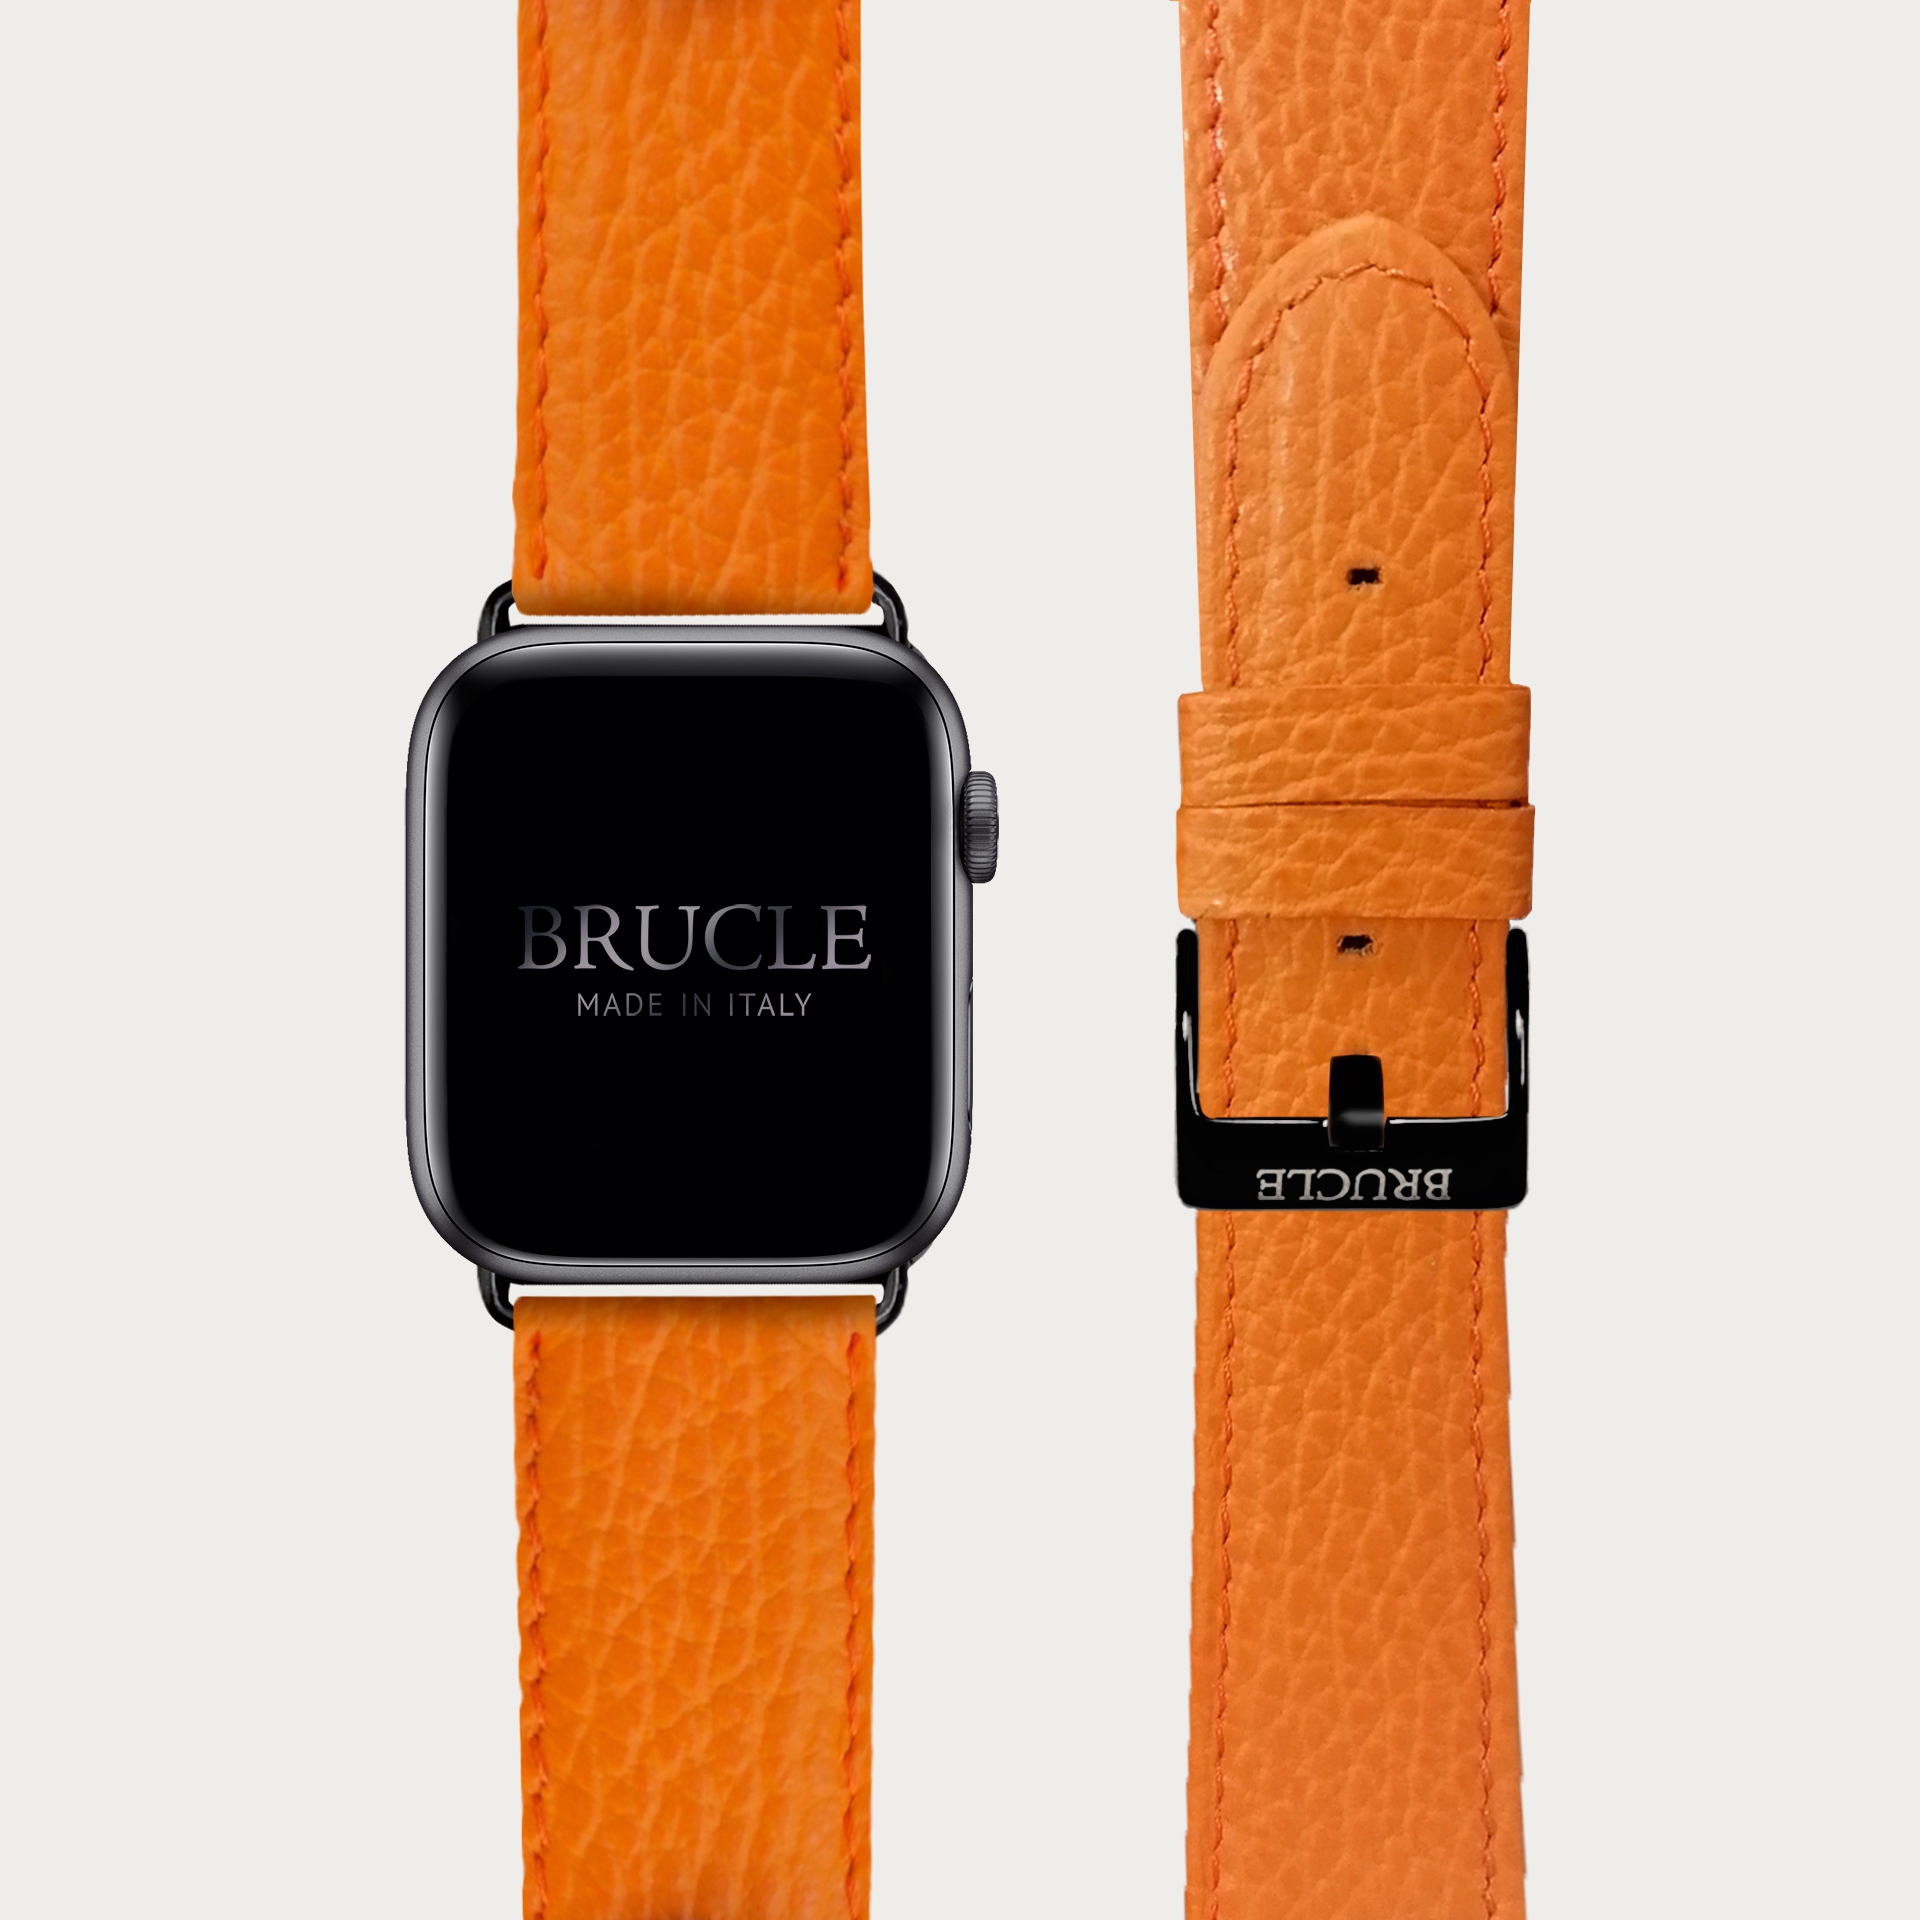 Cinturino arancio in pelle stampa dollaro per orologio, Apple Watch e Samsung Galaxy Watch